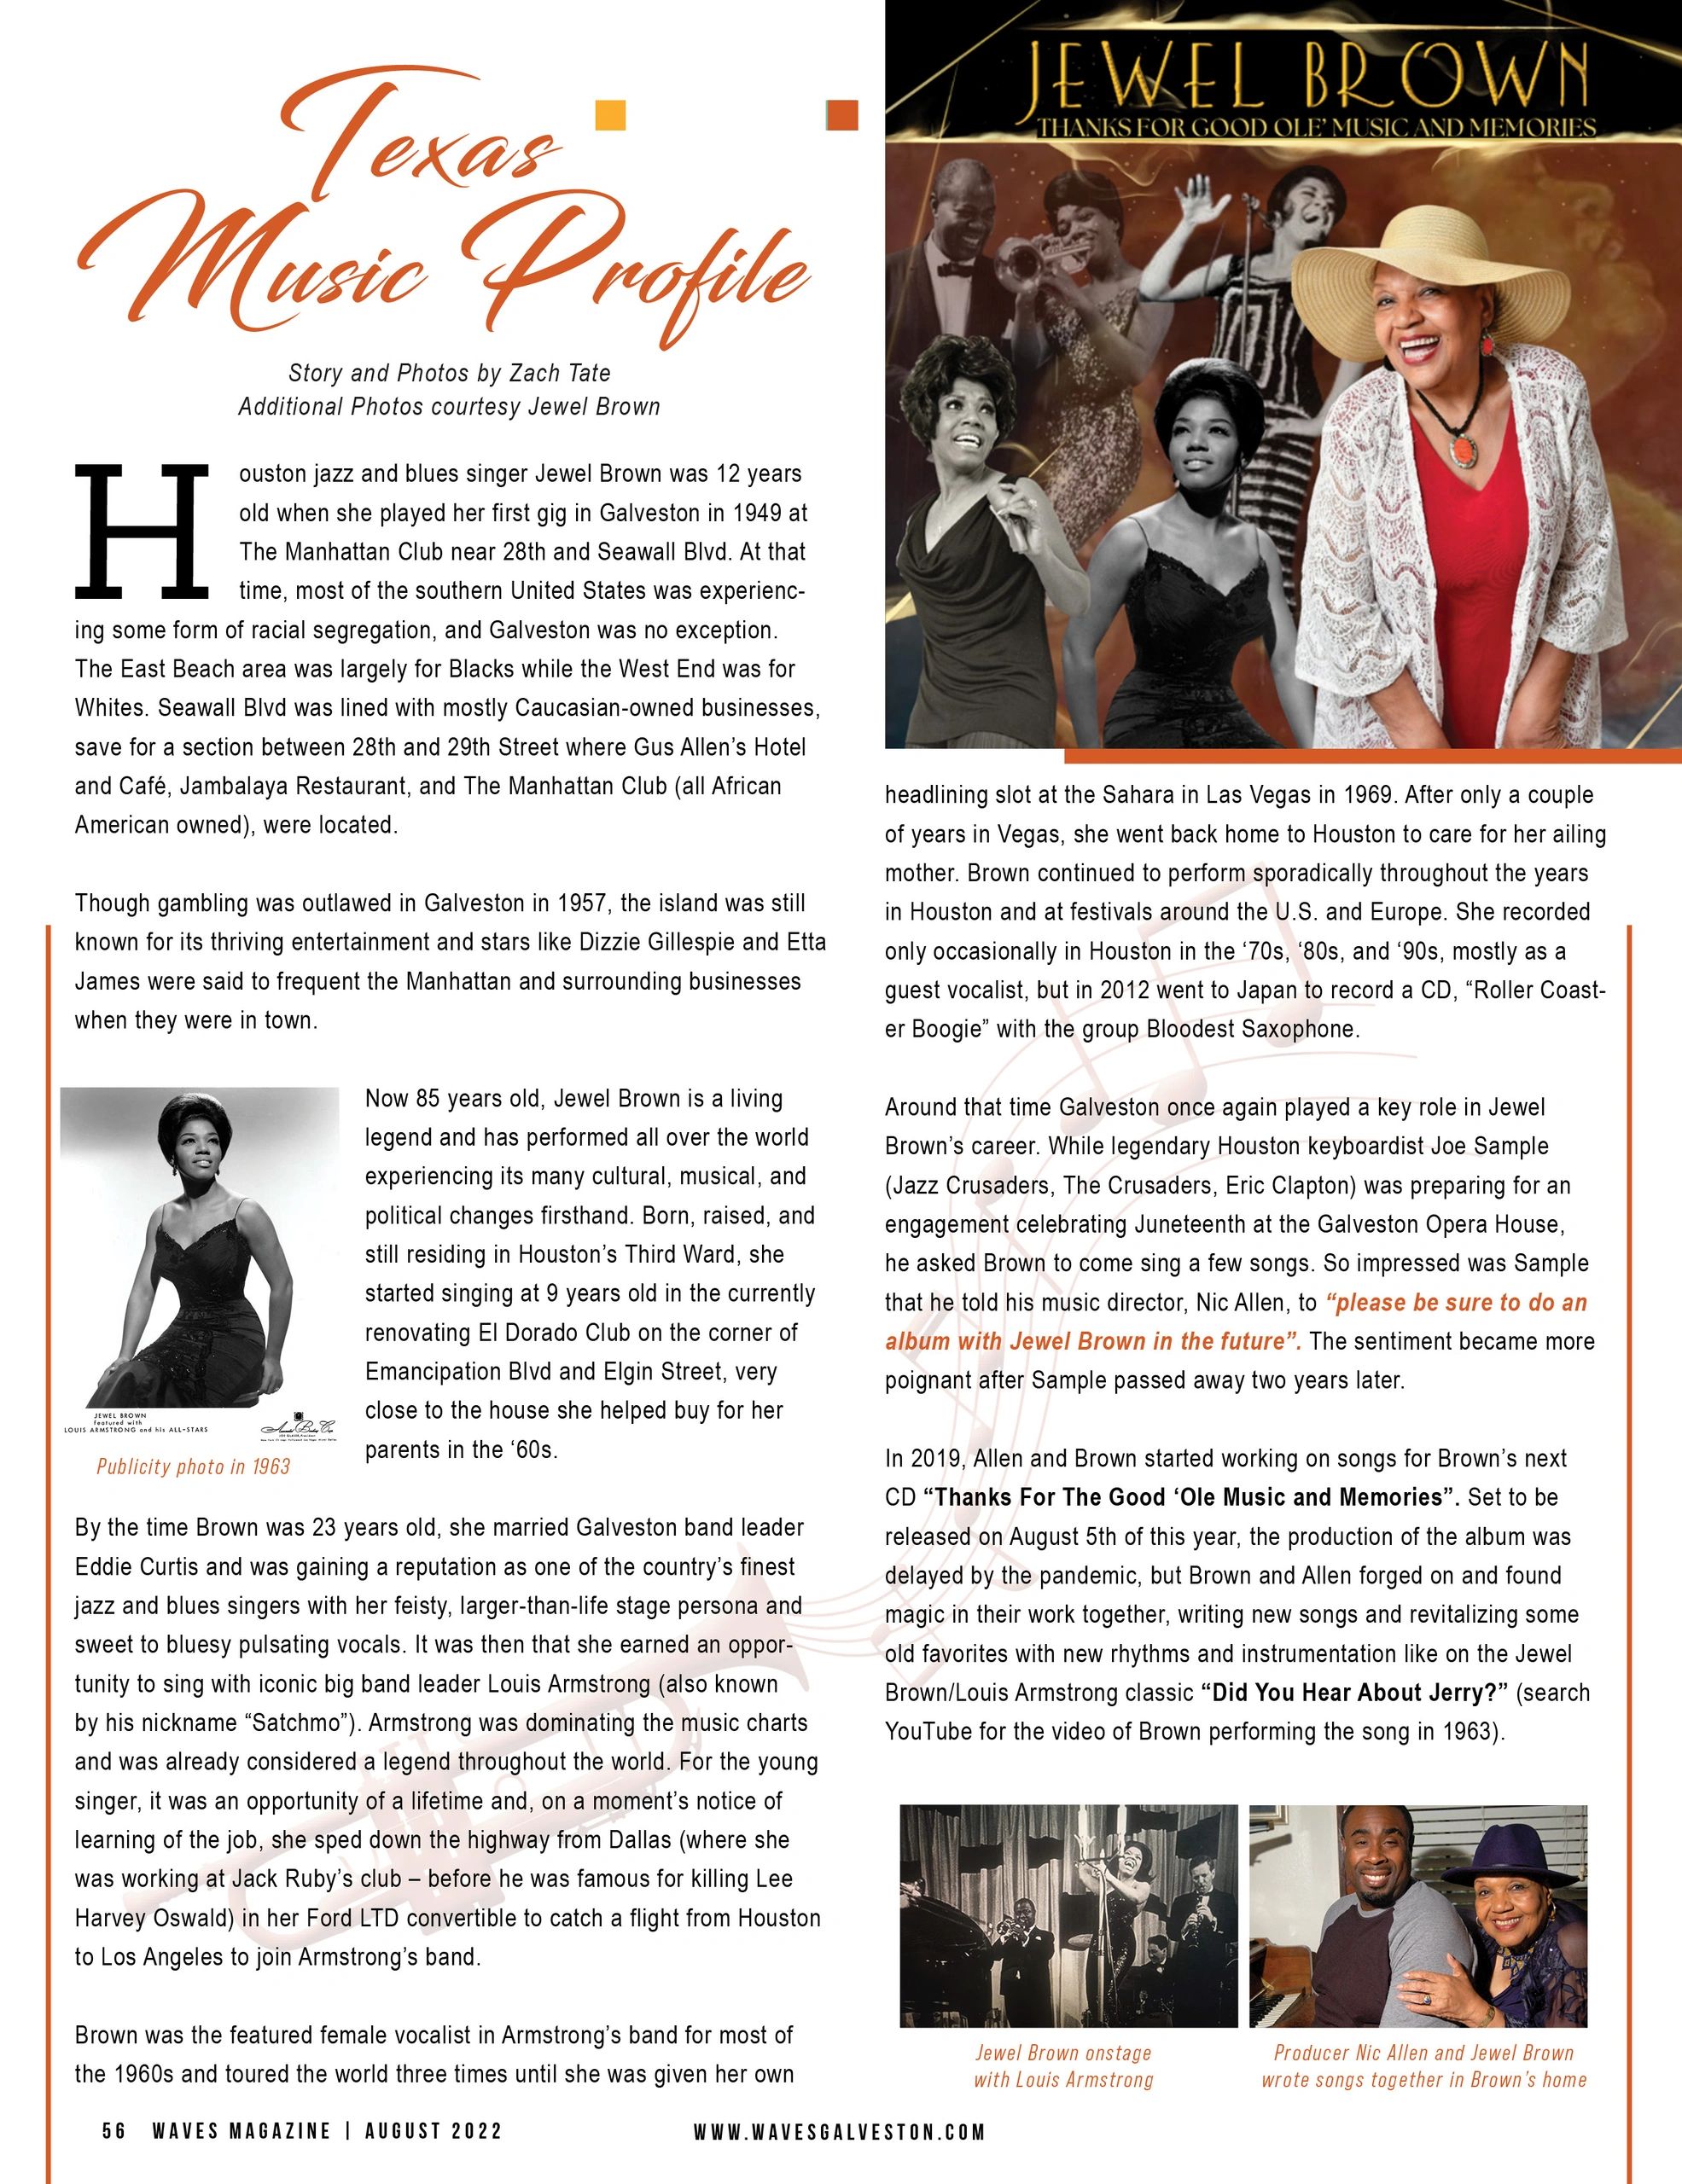 Texas Music Profile - Houston Blues Singer, Jewel Brown